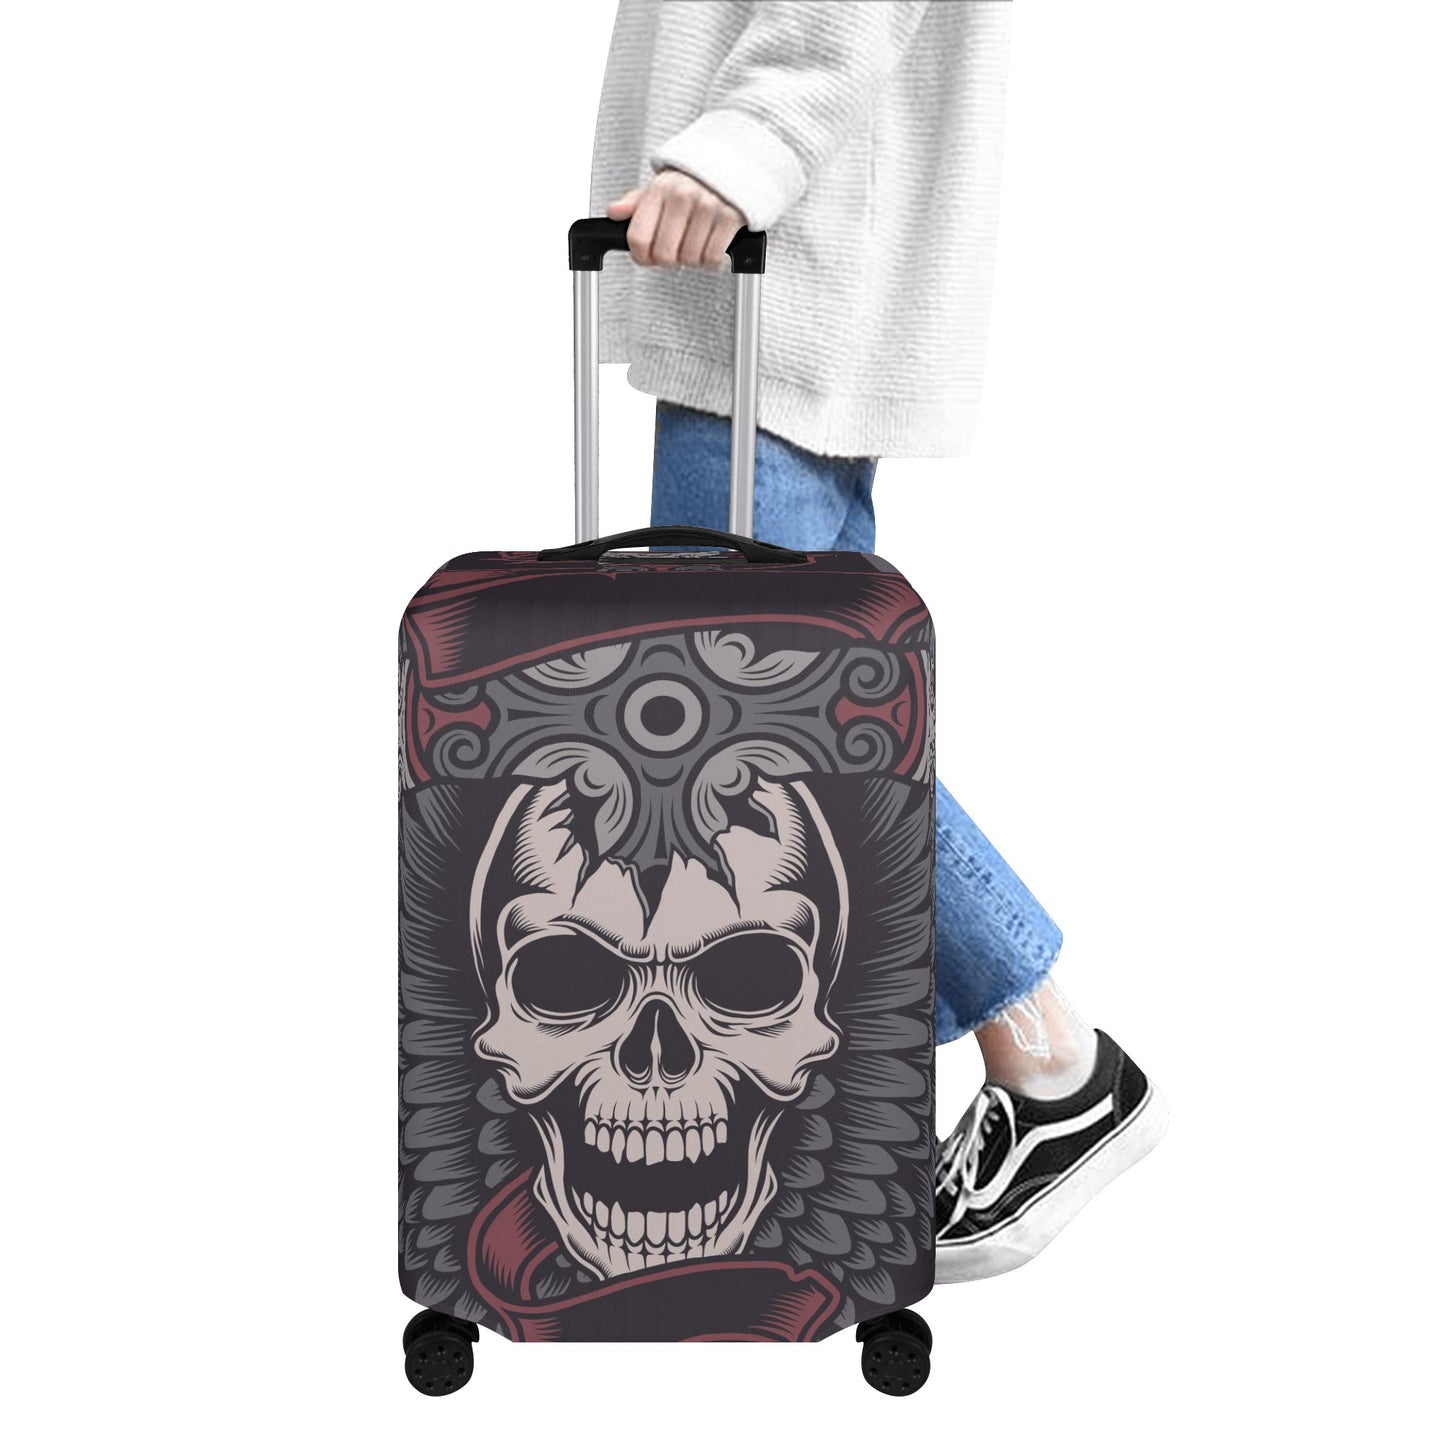 Evil luggage protector, skeleton suitcase, punisher skull luggage tag, skull luggage cover, evil suitcase cover, halloween luggage cover set